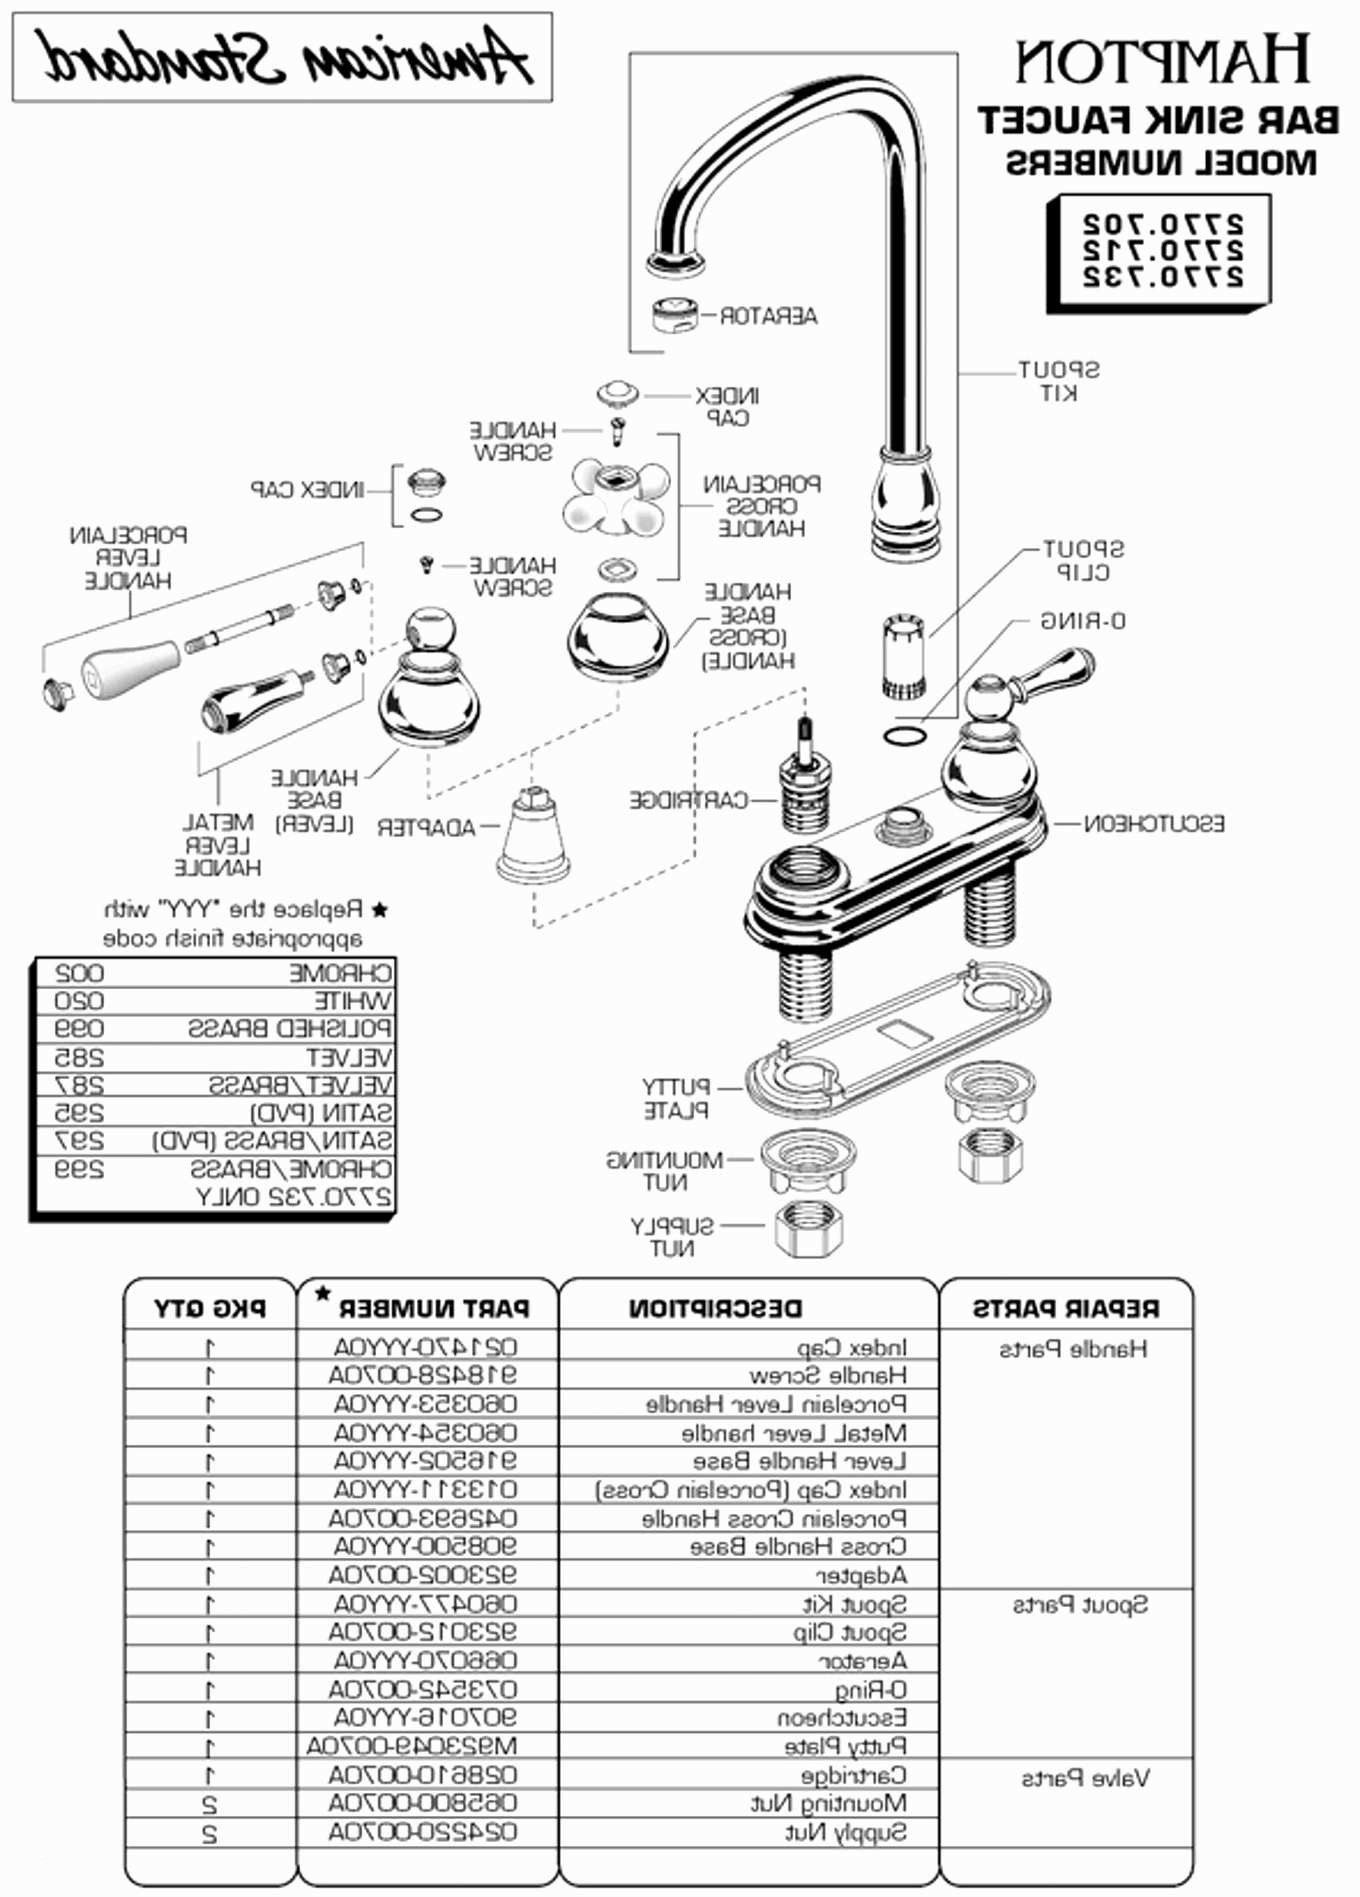 Car Suspension Diagram Vehicle Wiring Diagrams New Diagram A Car New Car Parts and Diagrams Of Car Suspension Diagram